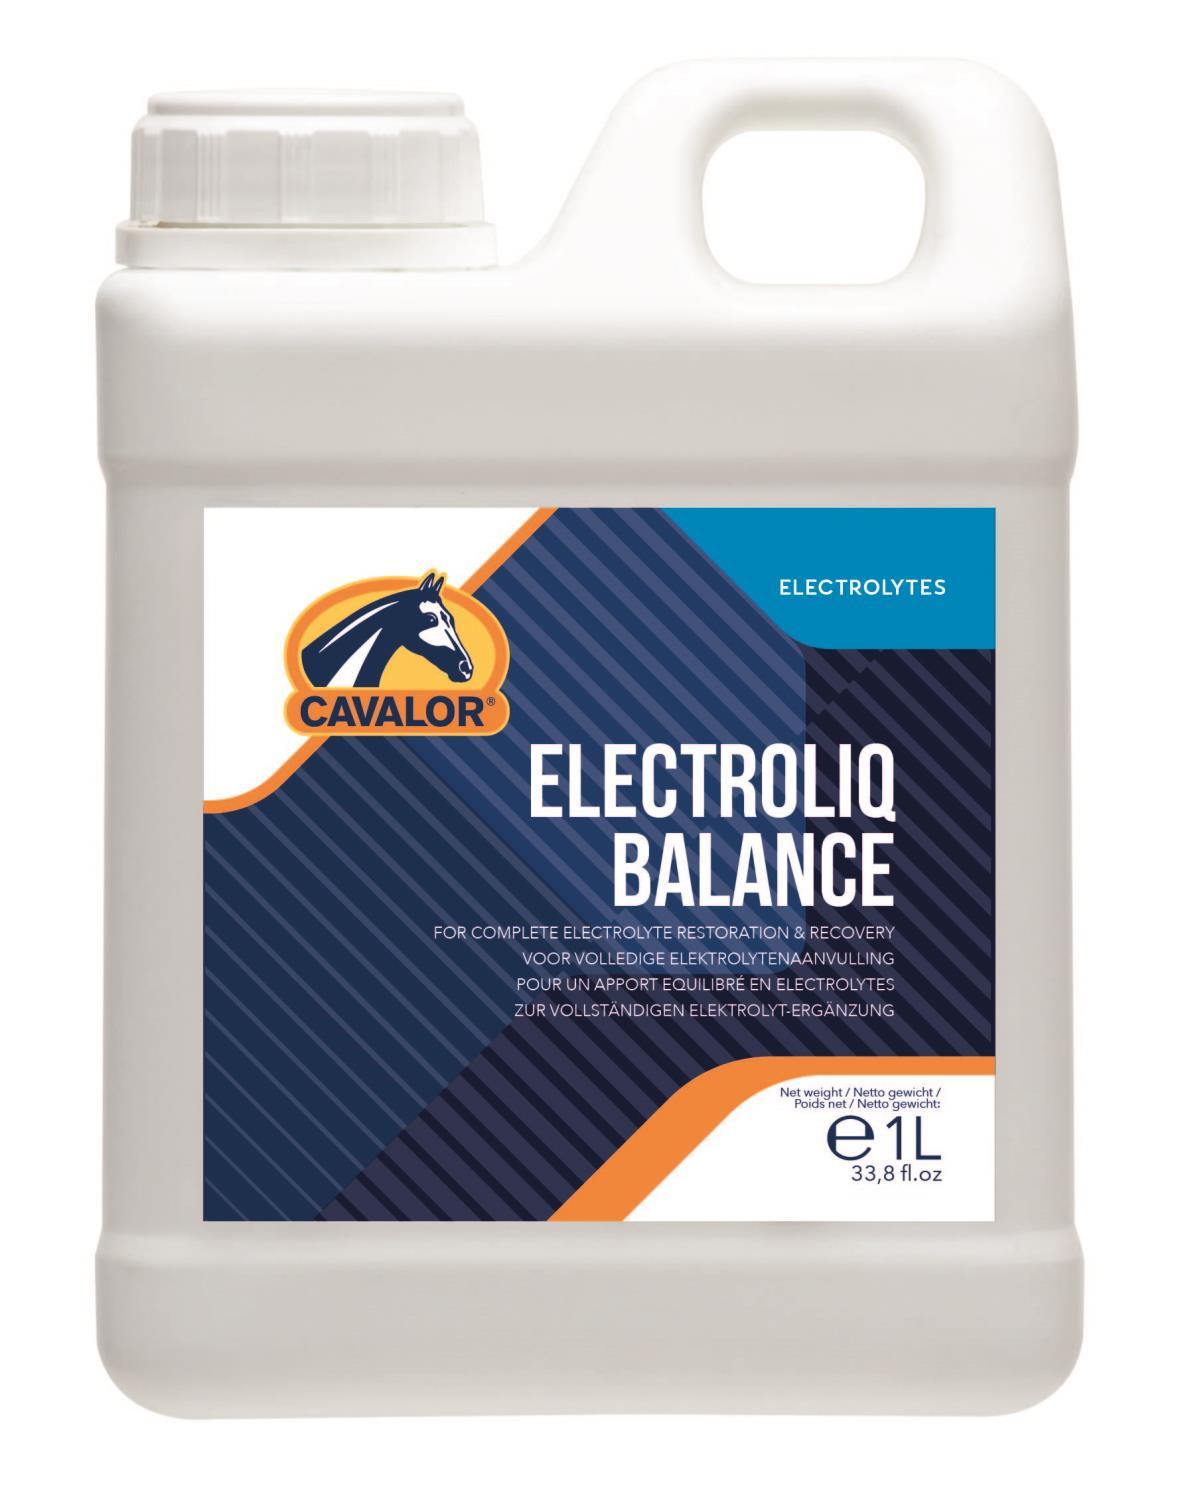 Cavalor Electroliq balance 1L